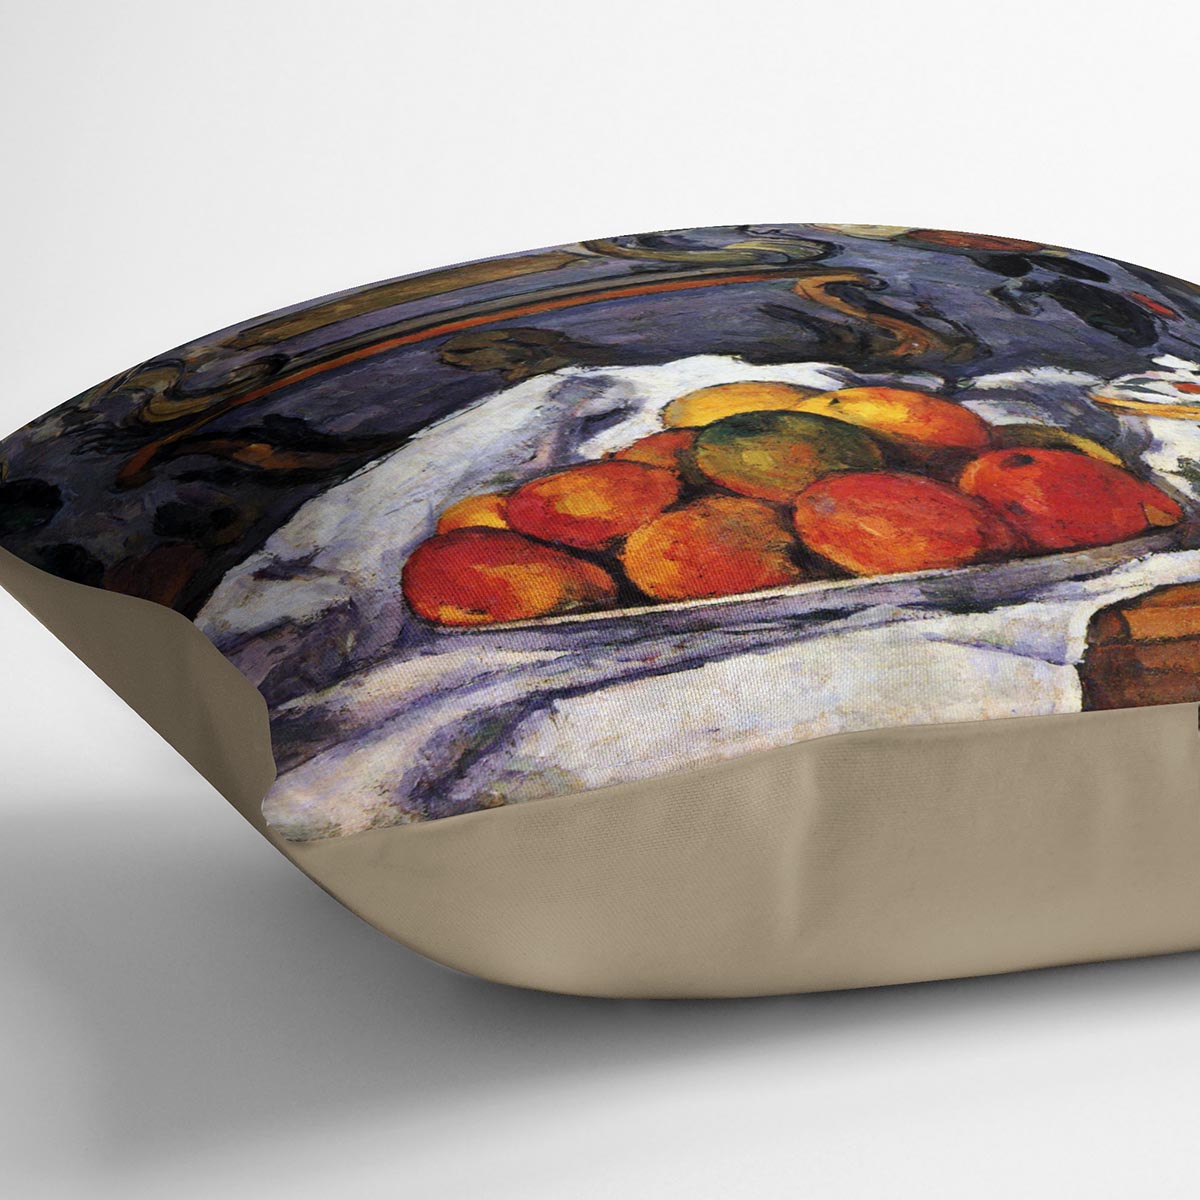 Still life bowl of apples by Cezanne Cushion - Canvas Art Rocks - 2